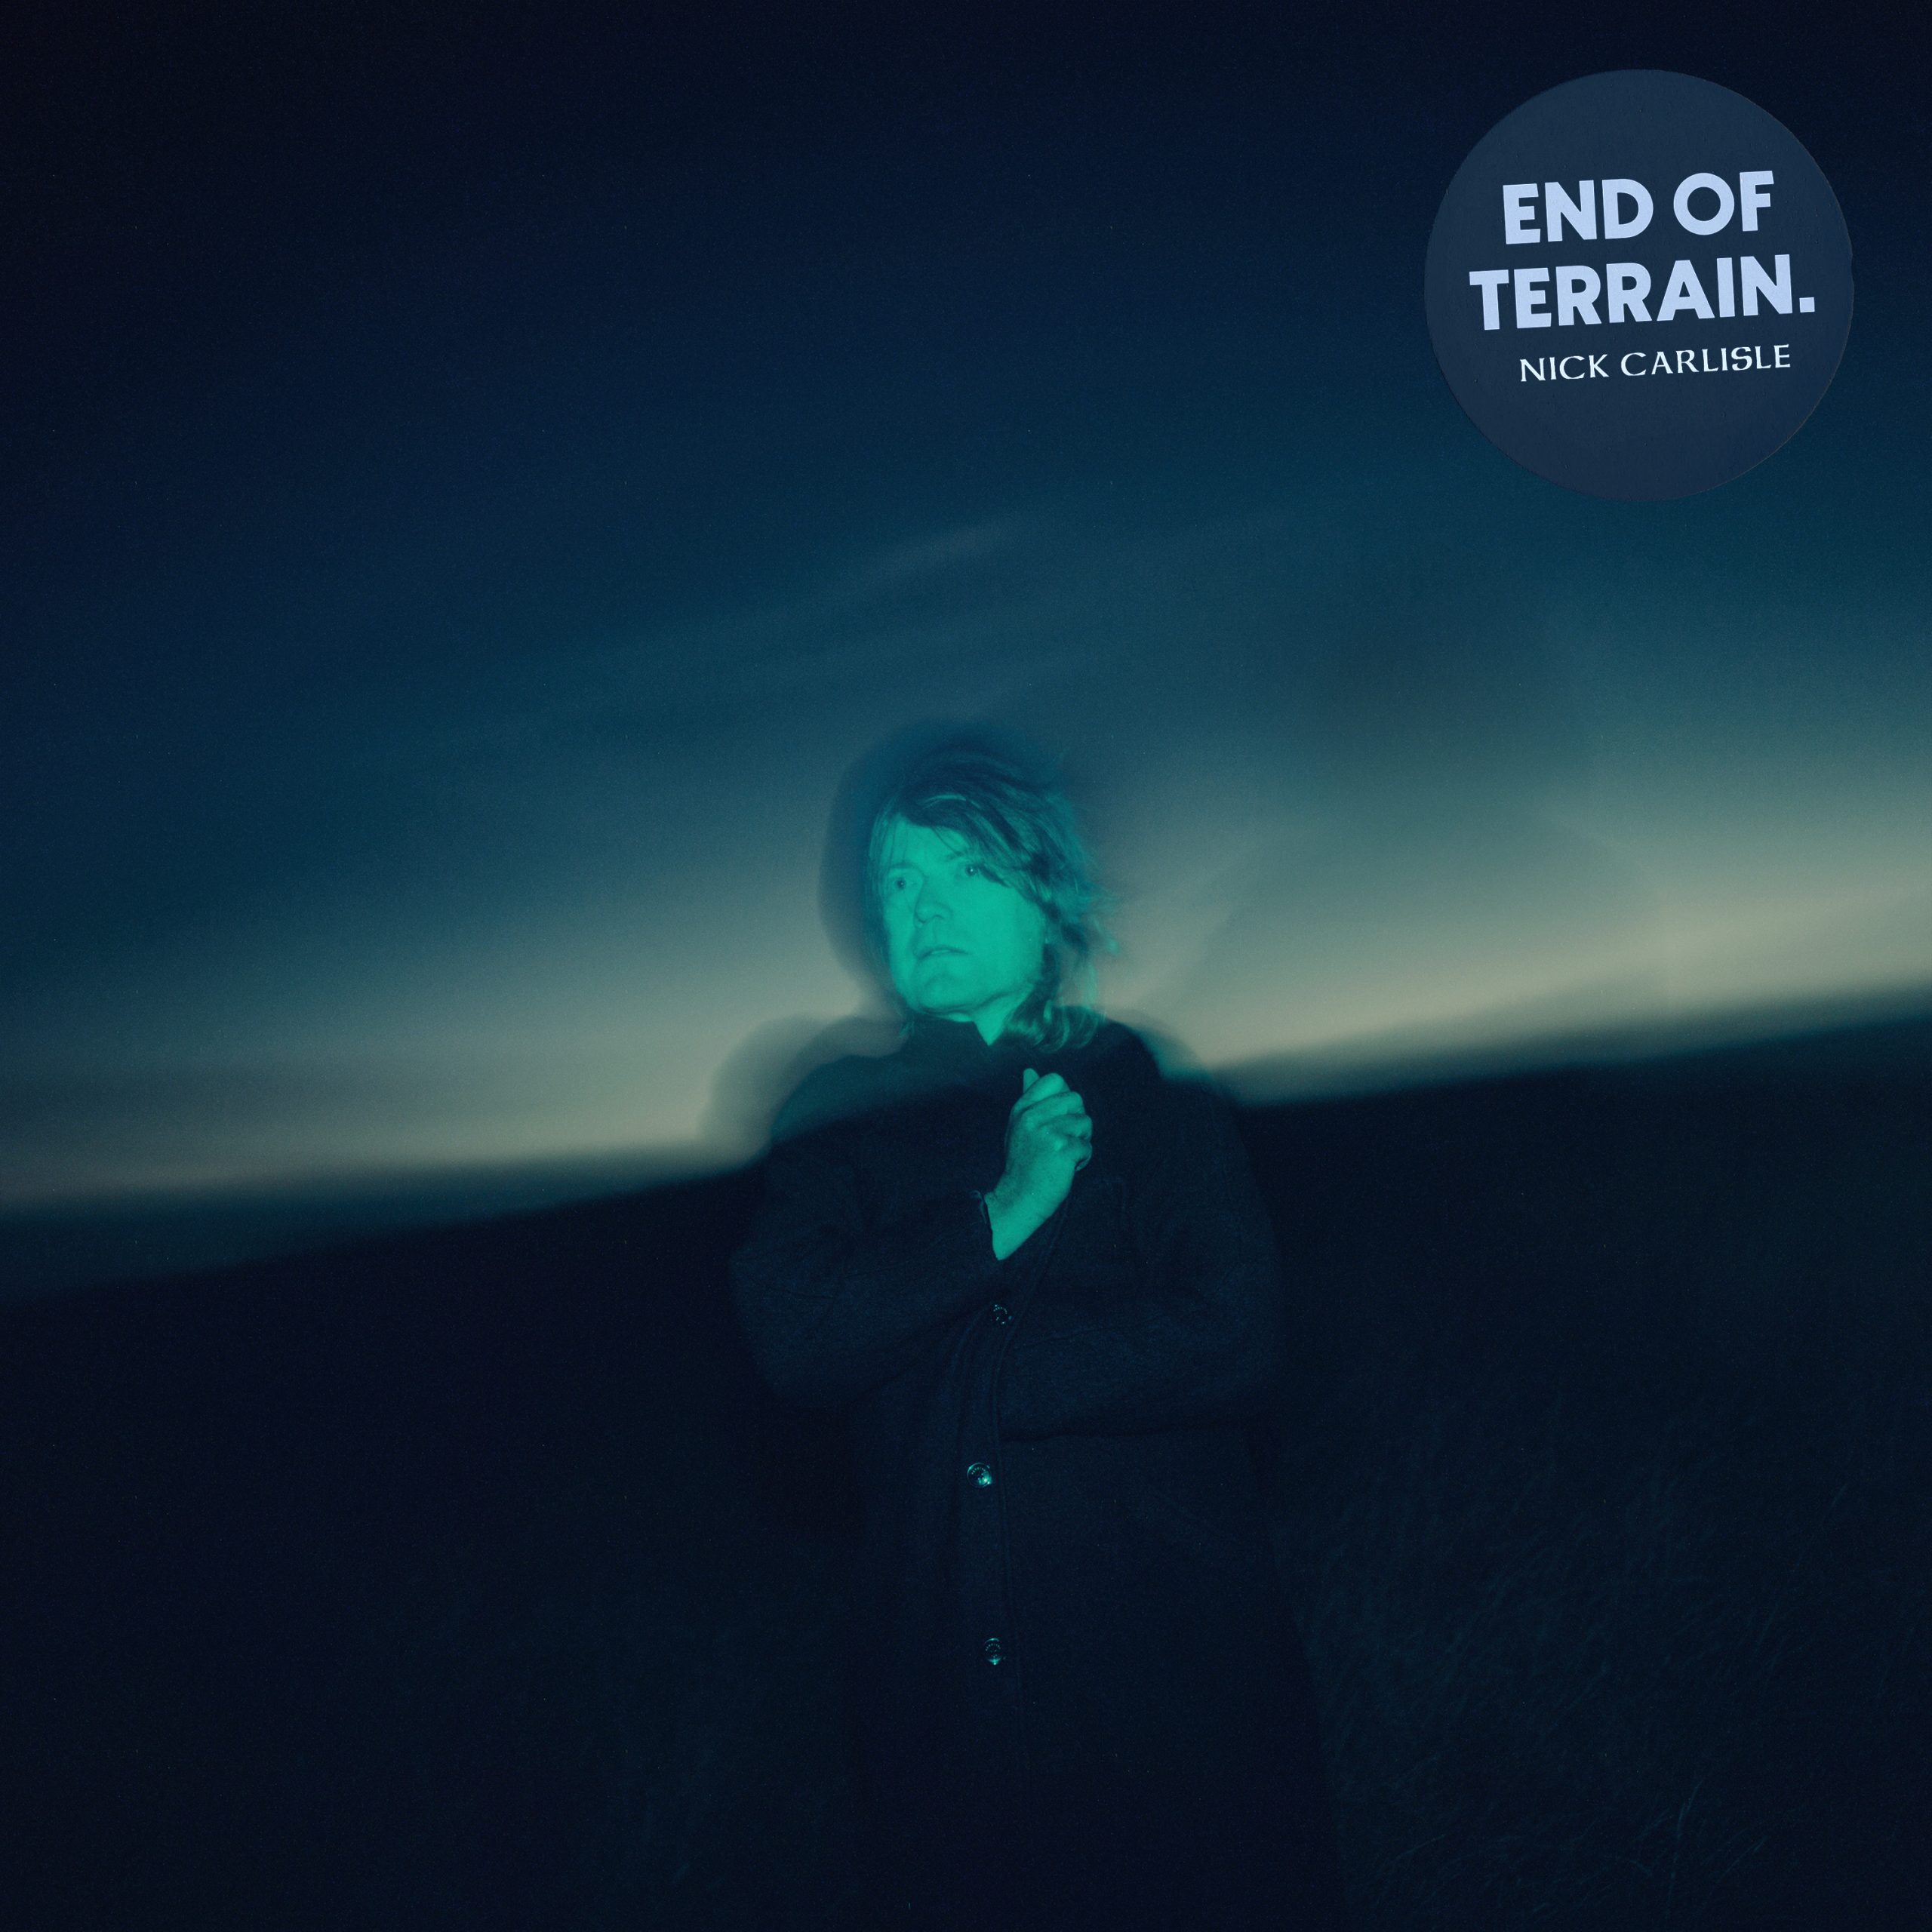 "End Of Terrain." single by Nick Carlisle